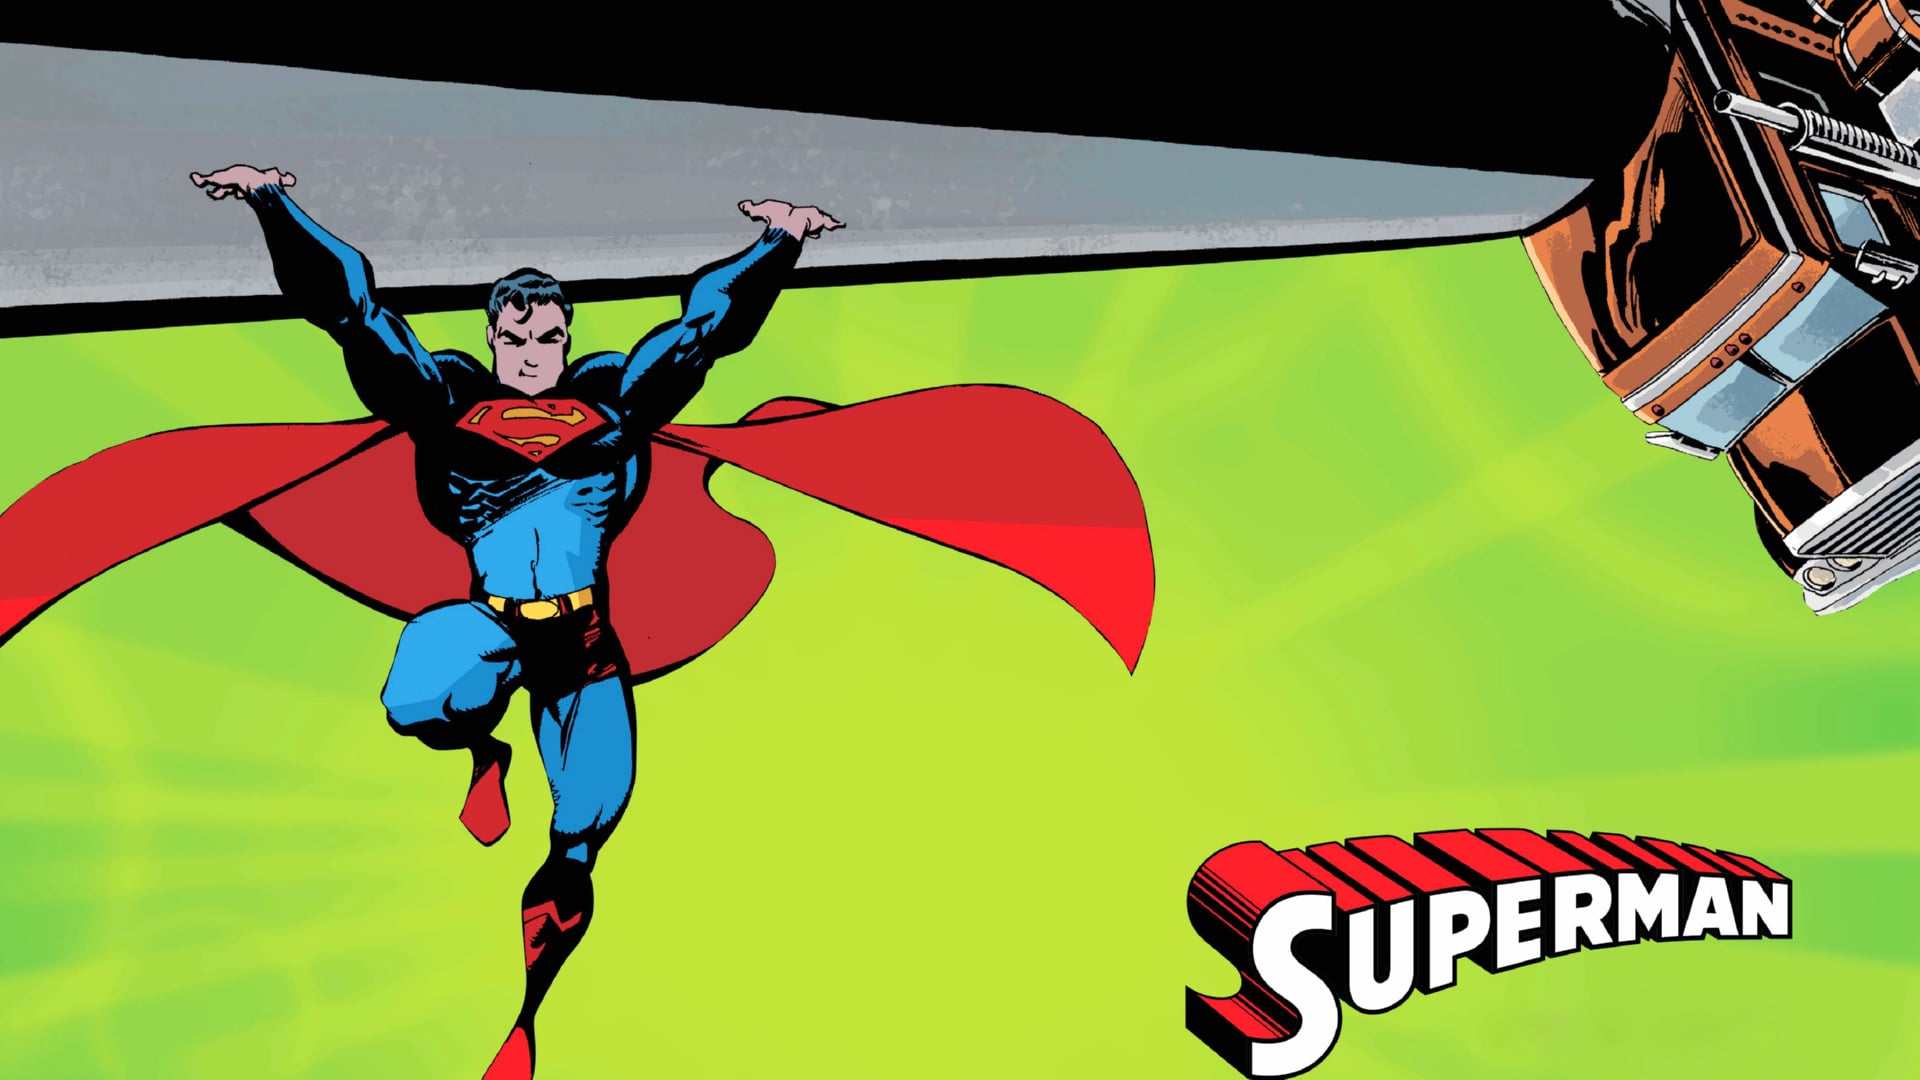 Superman Kryptonite at 1024 x 1024 iPad size wallpapers HD quality